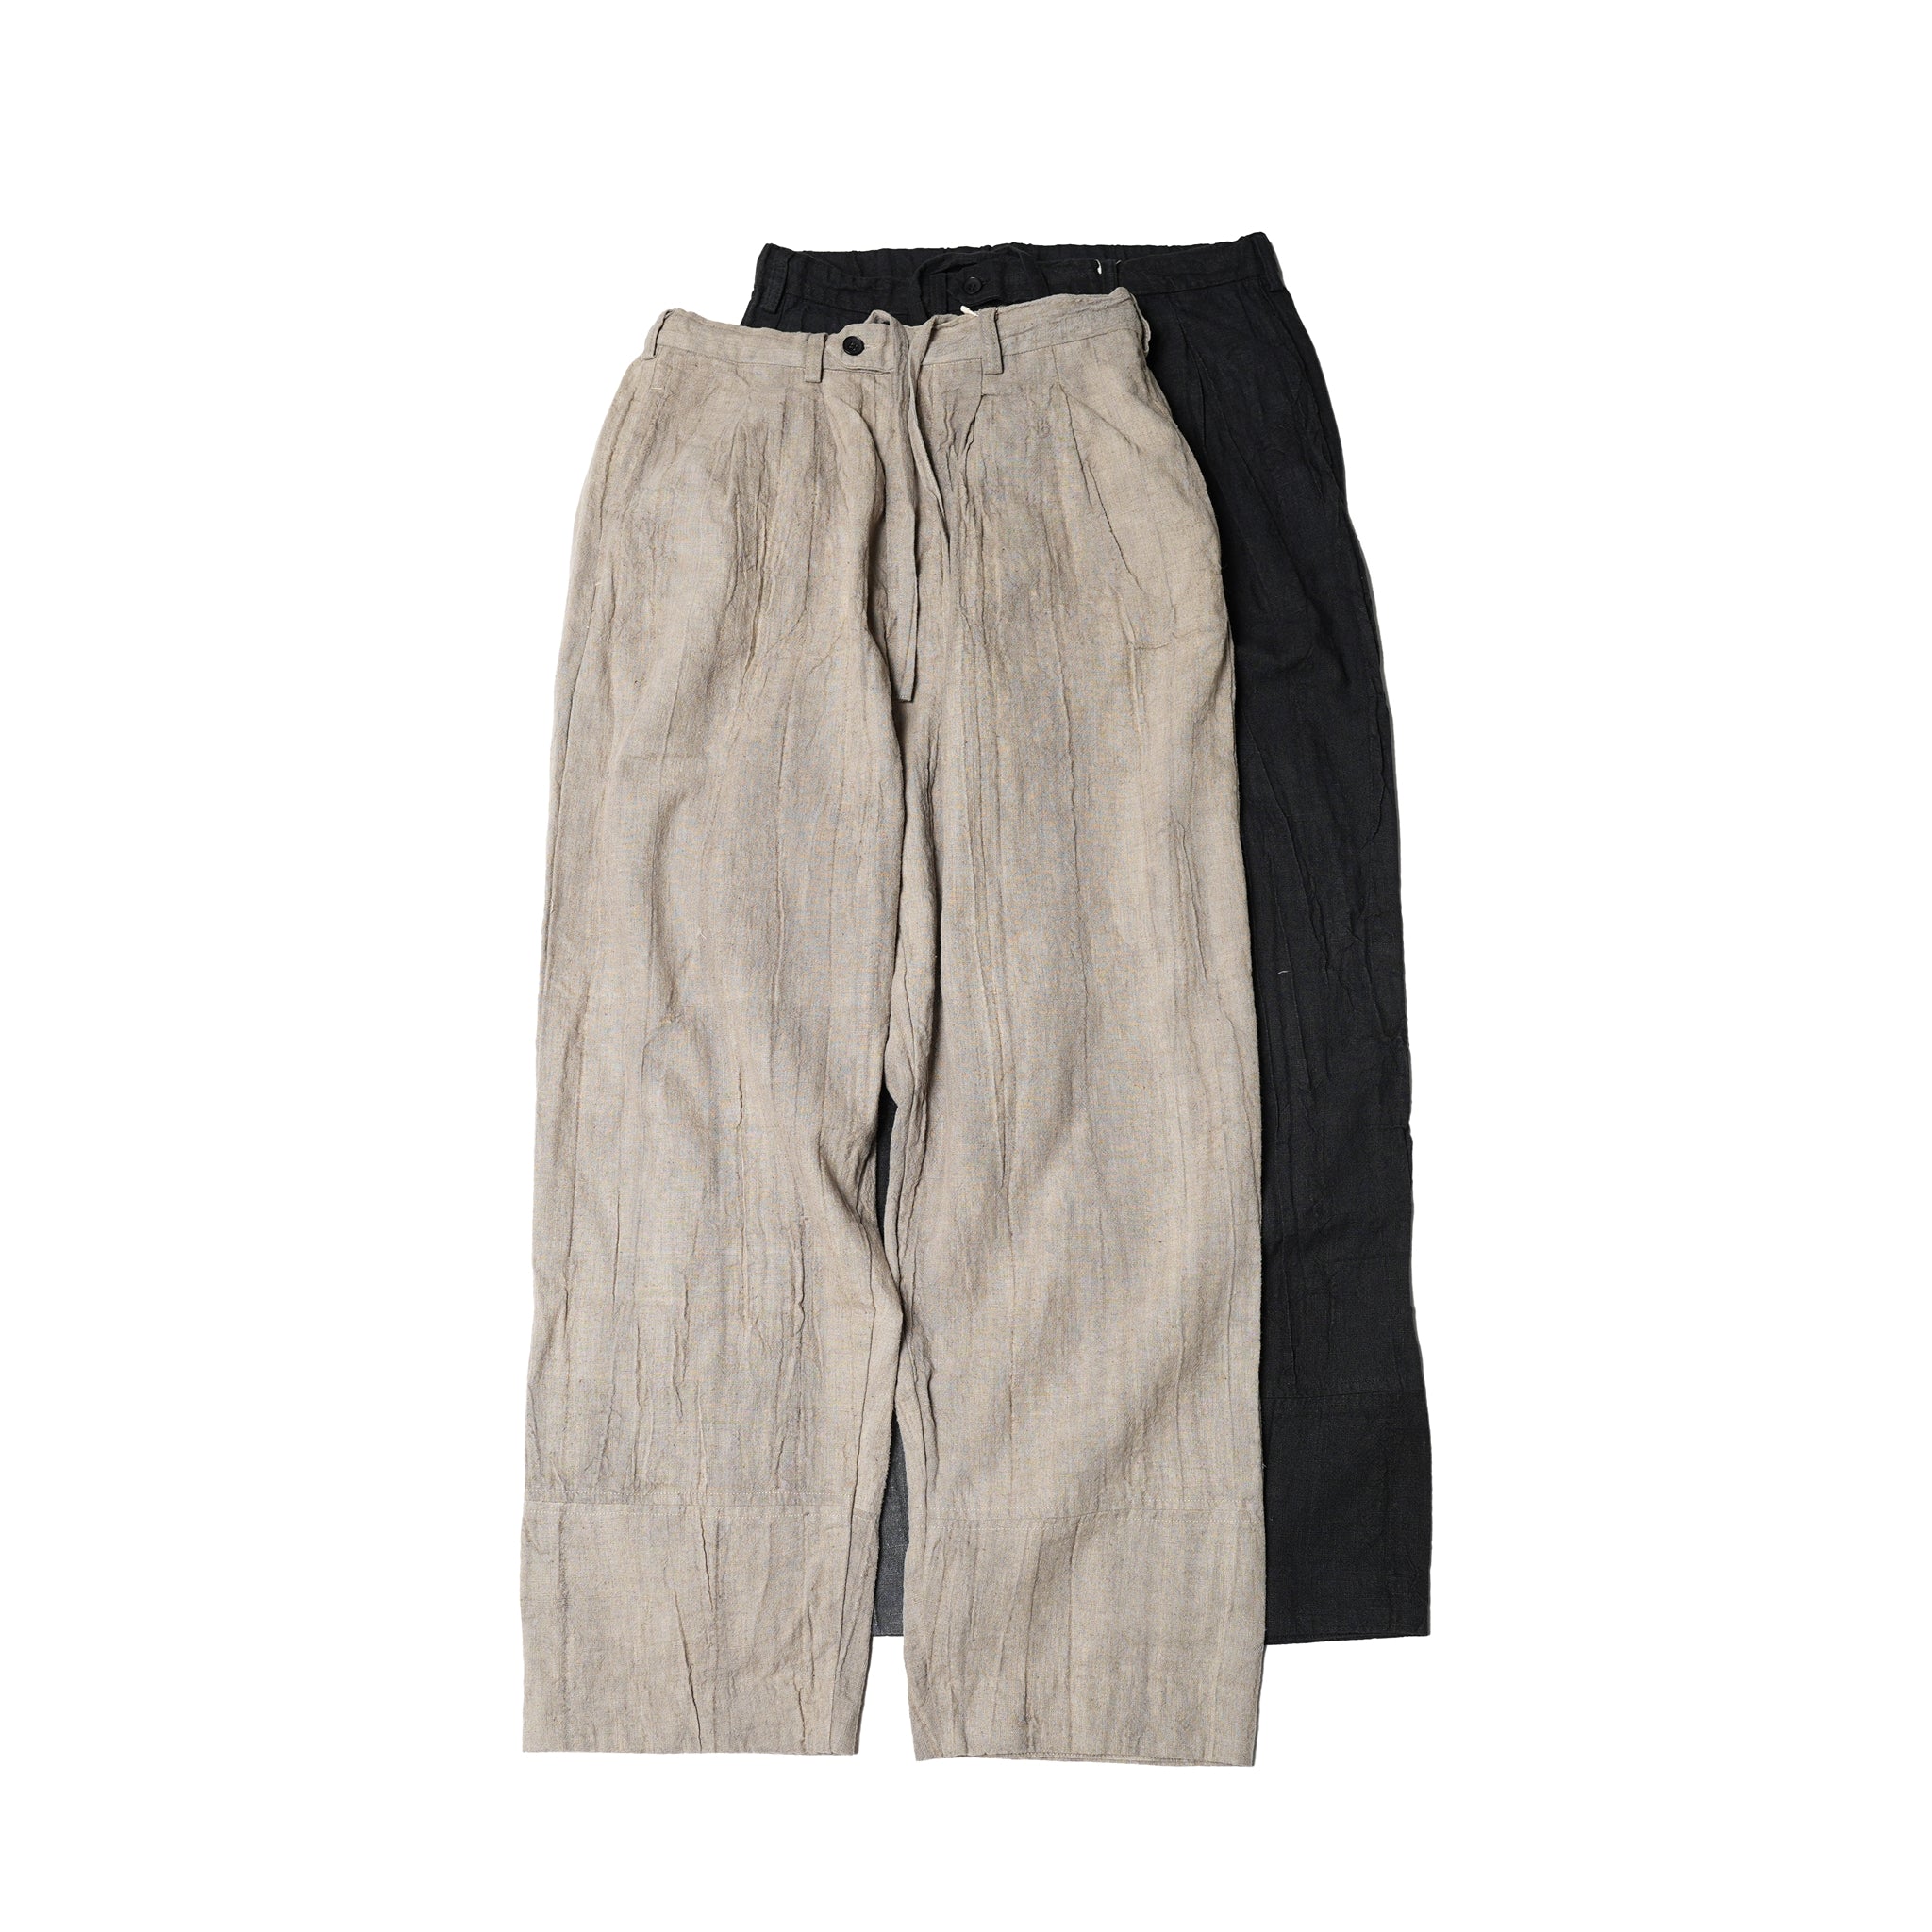 No:M-2310853 | Name:Linen mix tuck pants | Color:Sand/Black【MODEM DESIGN_モデムデザイン】